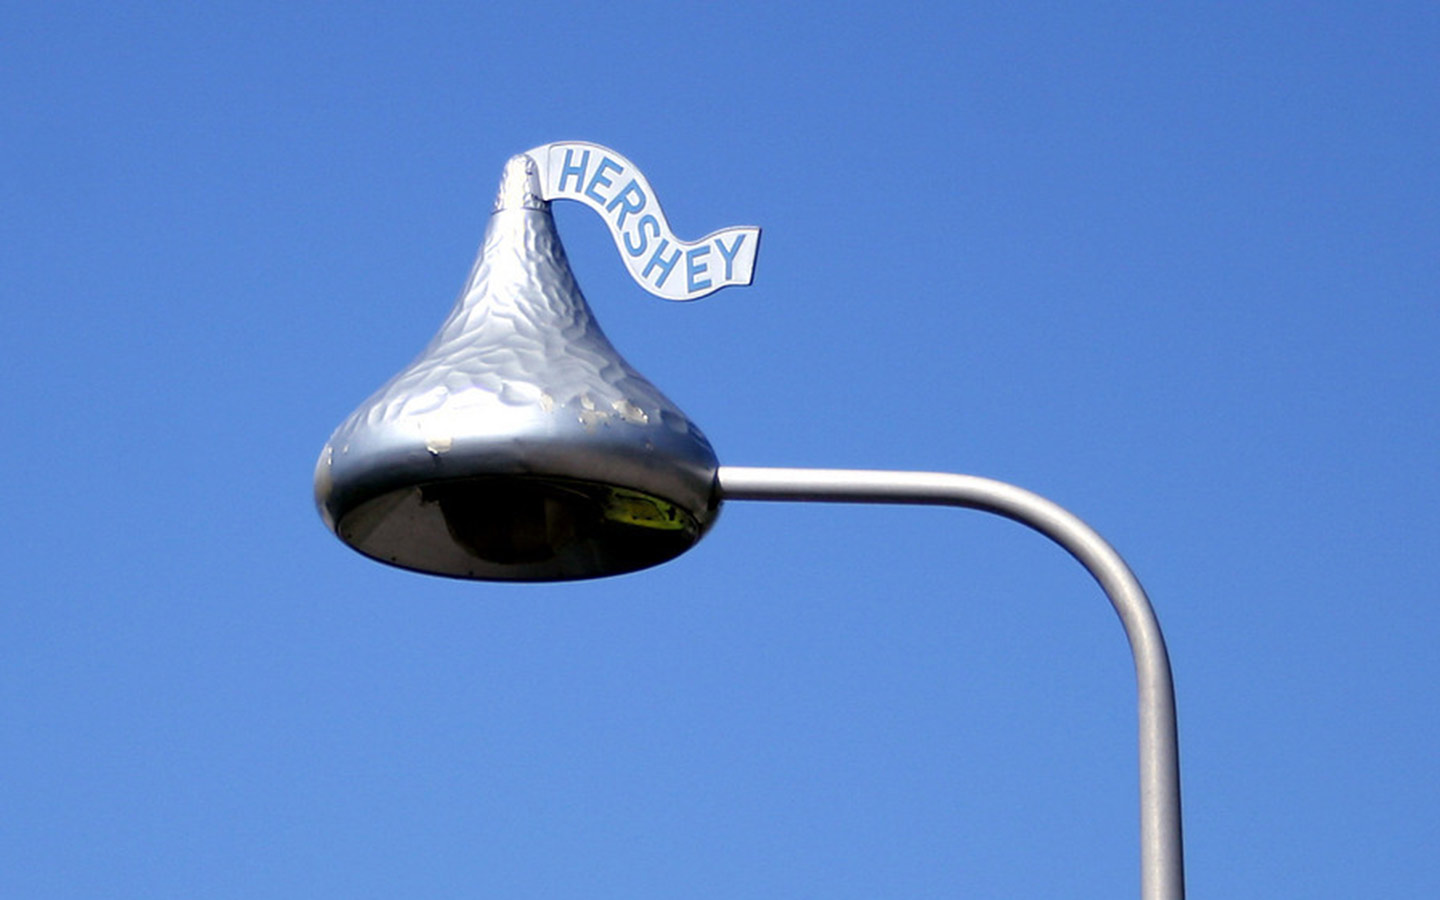 Hershey Kiss lamp in Hershey, PA